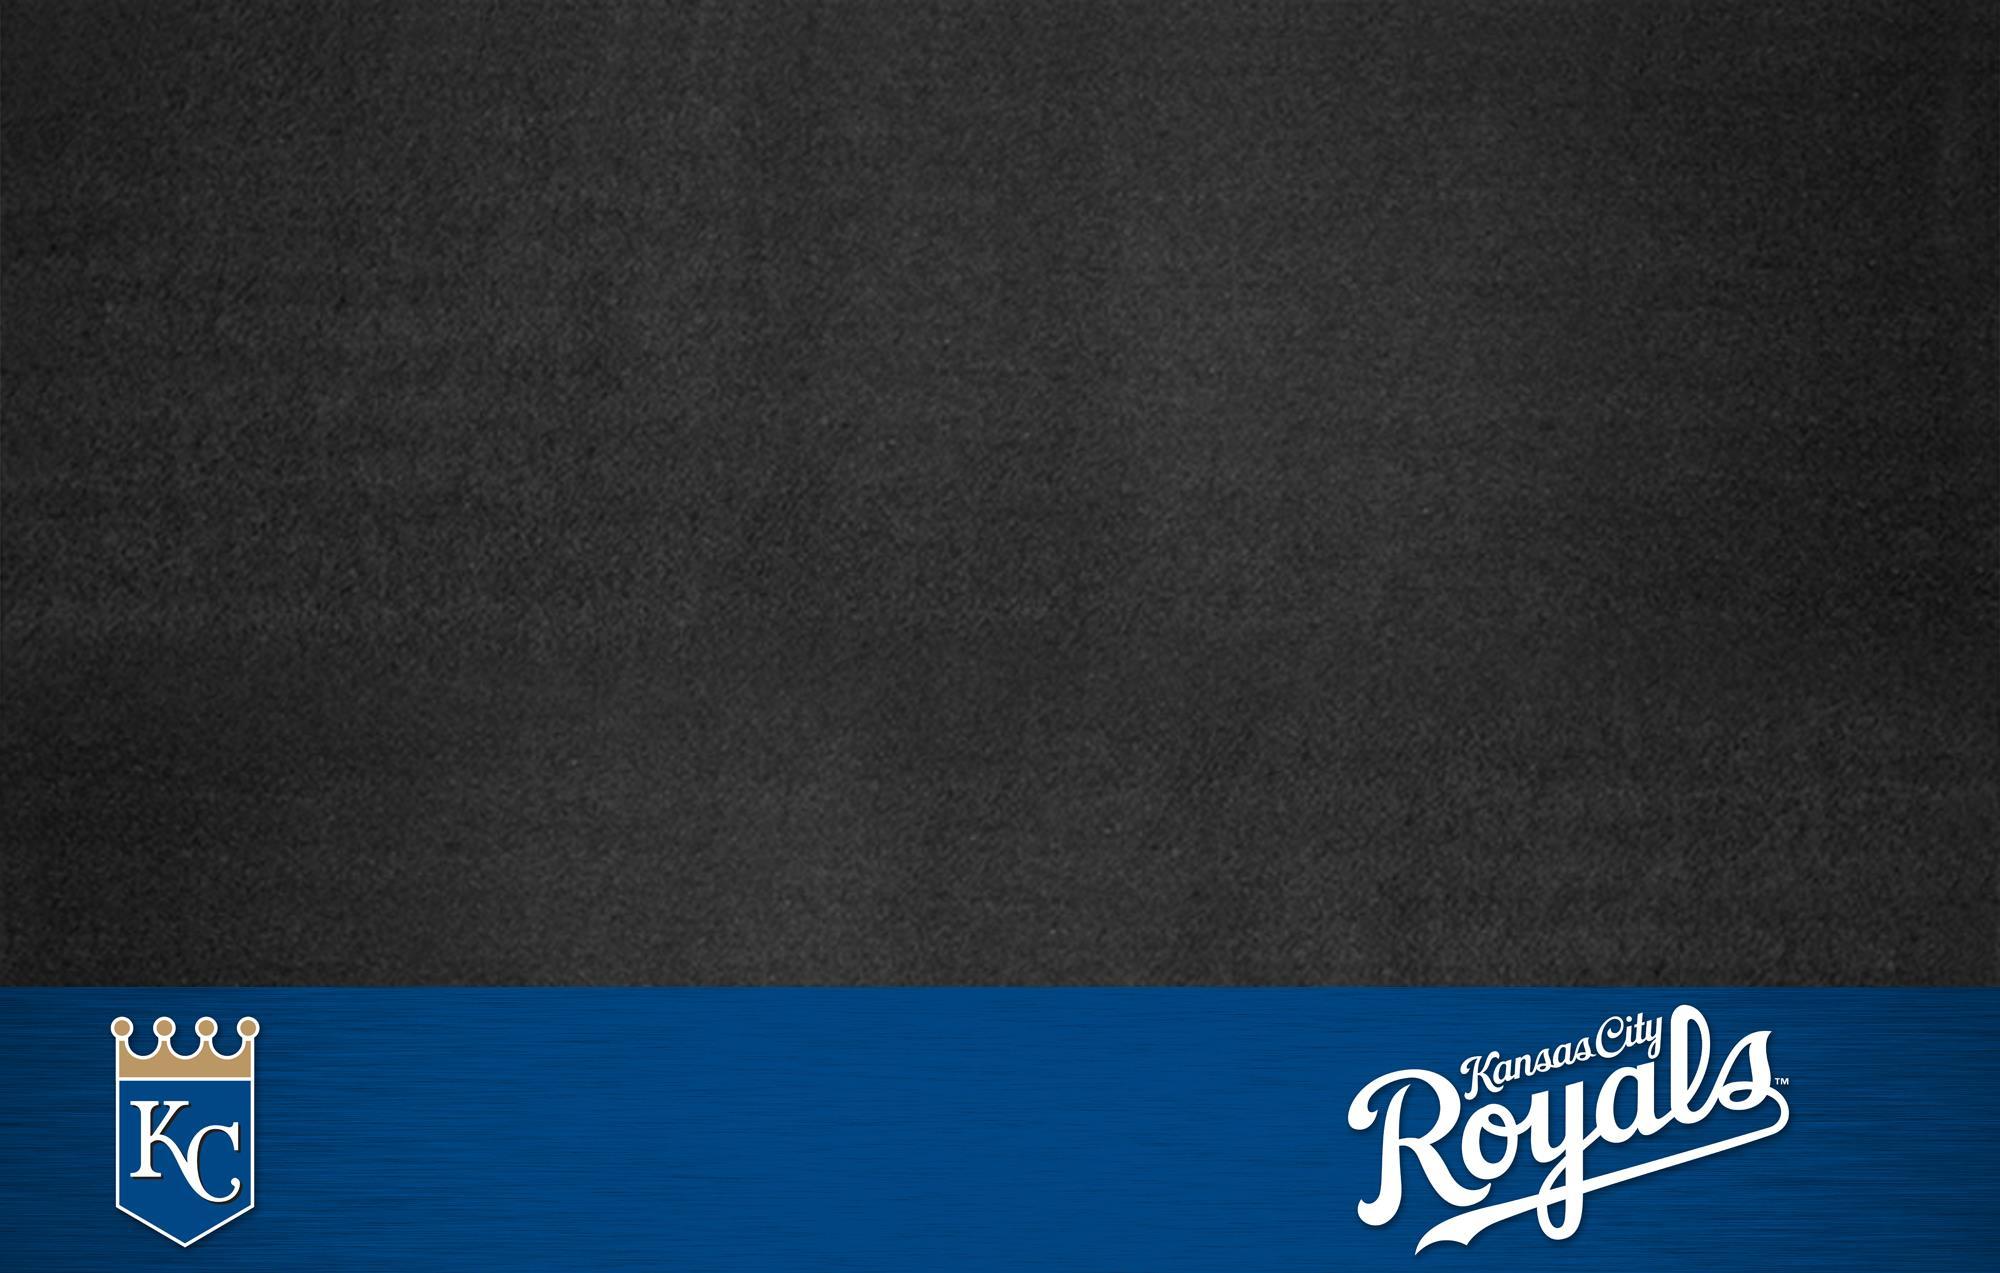 Kansas City Royals HD Wallpaper DESKTOP WALLPAPERS